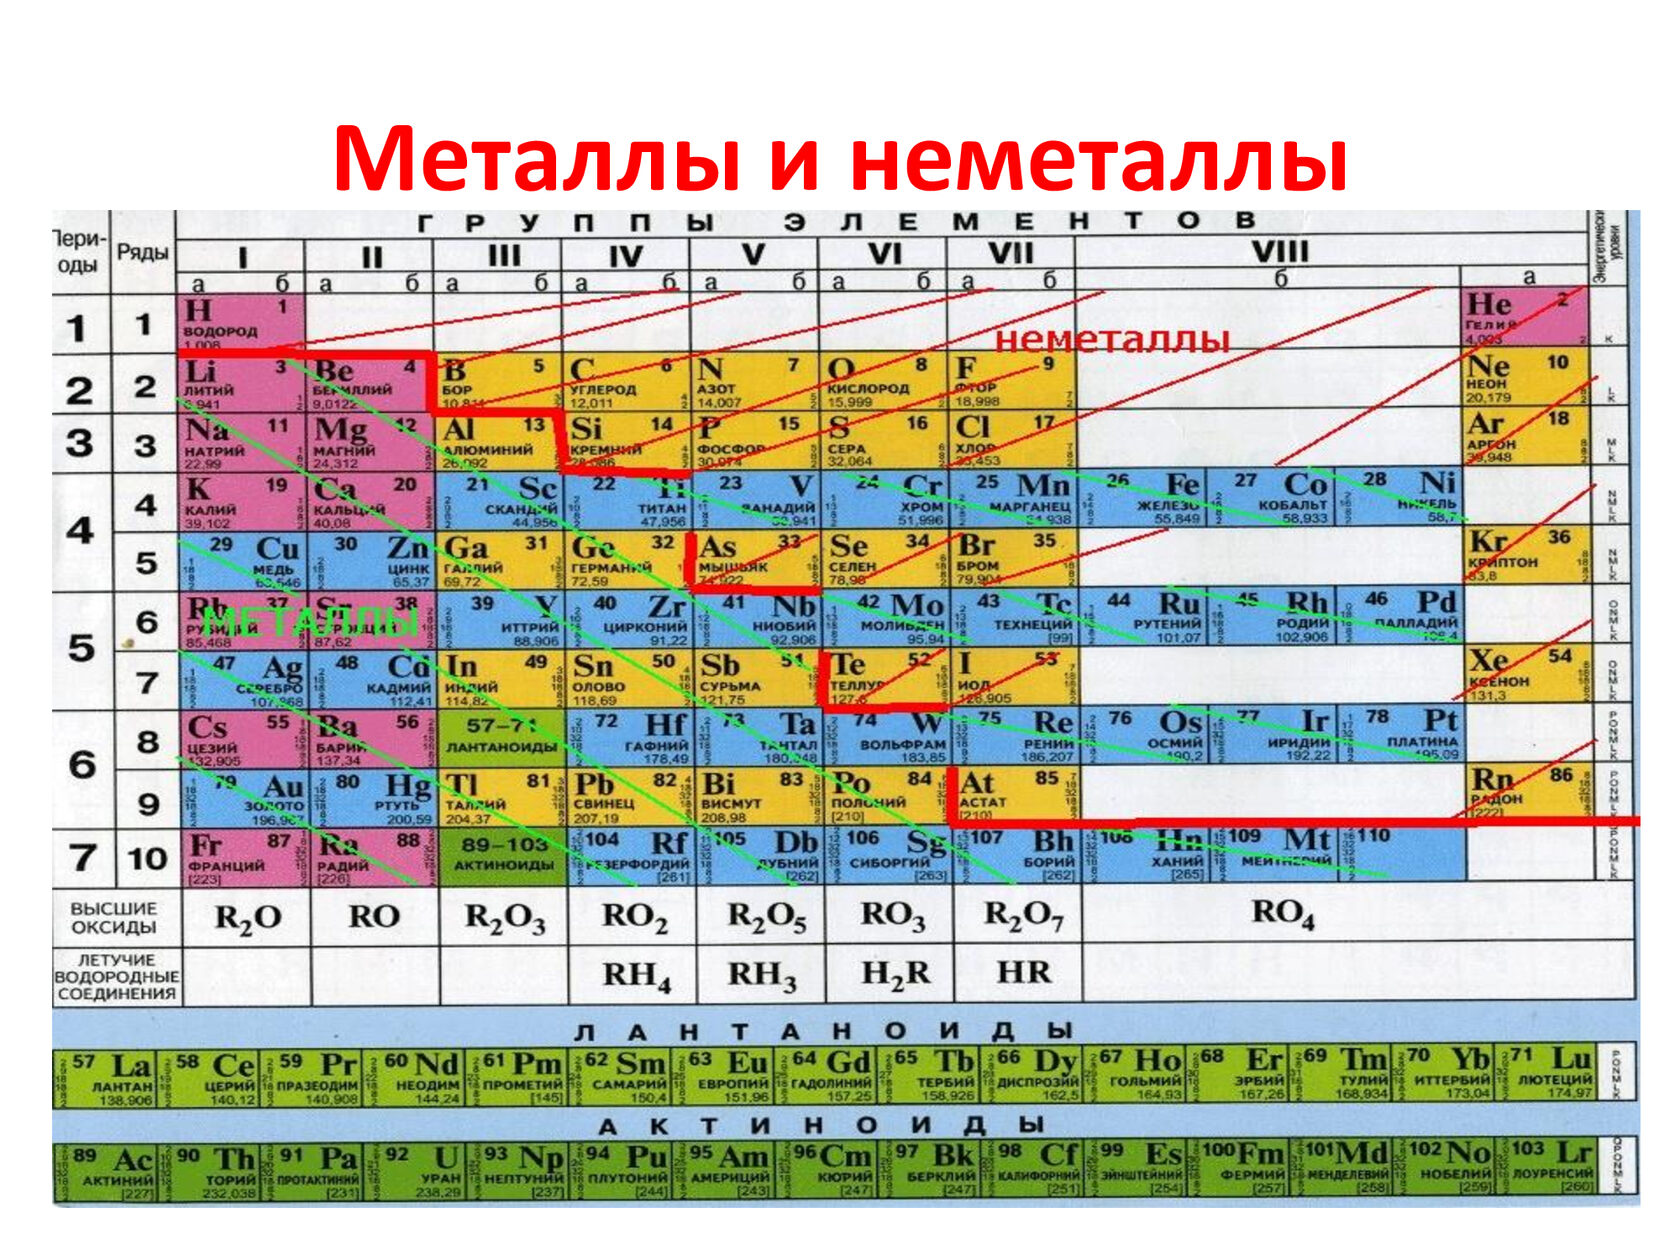 Тип элемента s p d. Таблица Менделеева металлы и неметаллы. Химия металлы и неметаллы таблица. Химические элементы металлы и неметаллы. Таблица элементов Менделеева металлы и неметаллы.